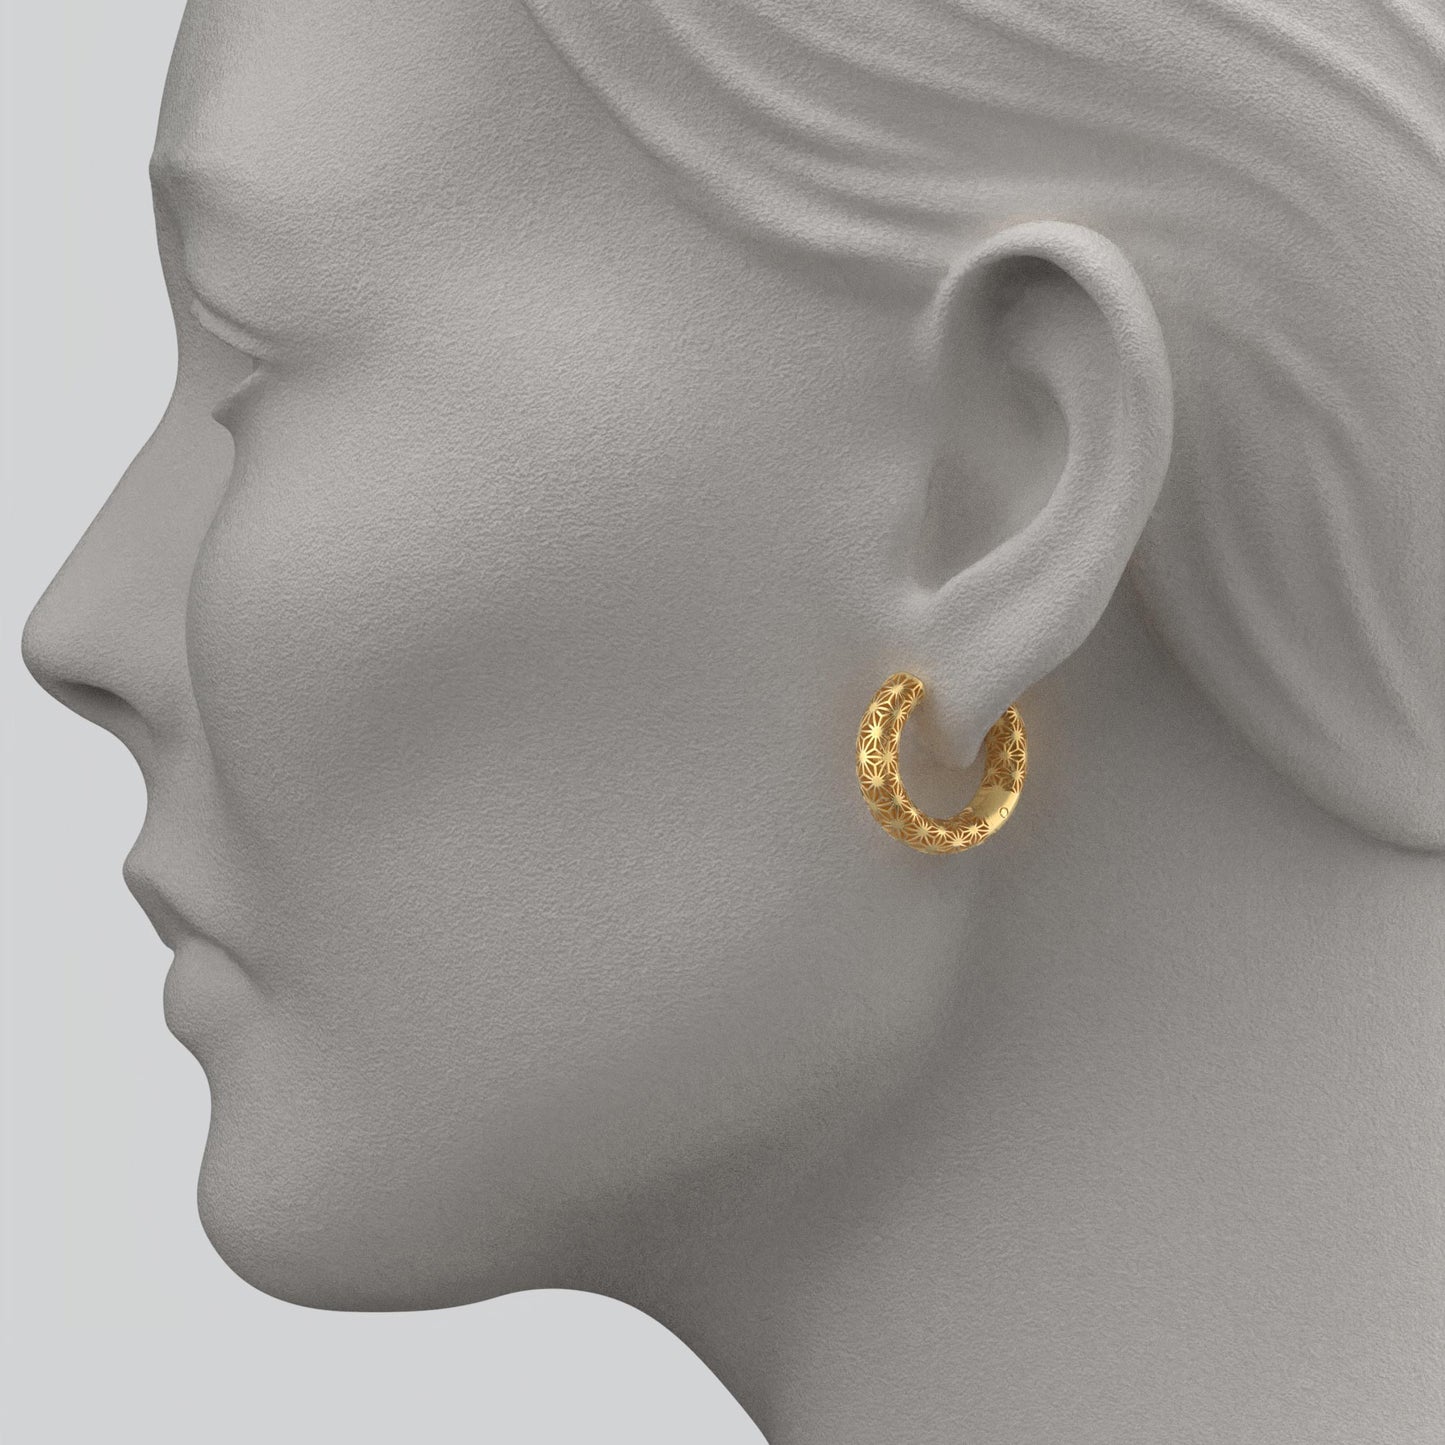 Japanese Patter Gold Hoop Earrings